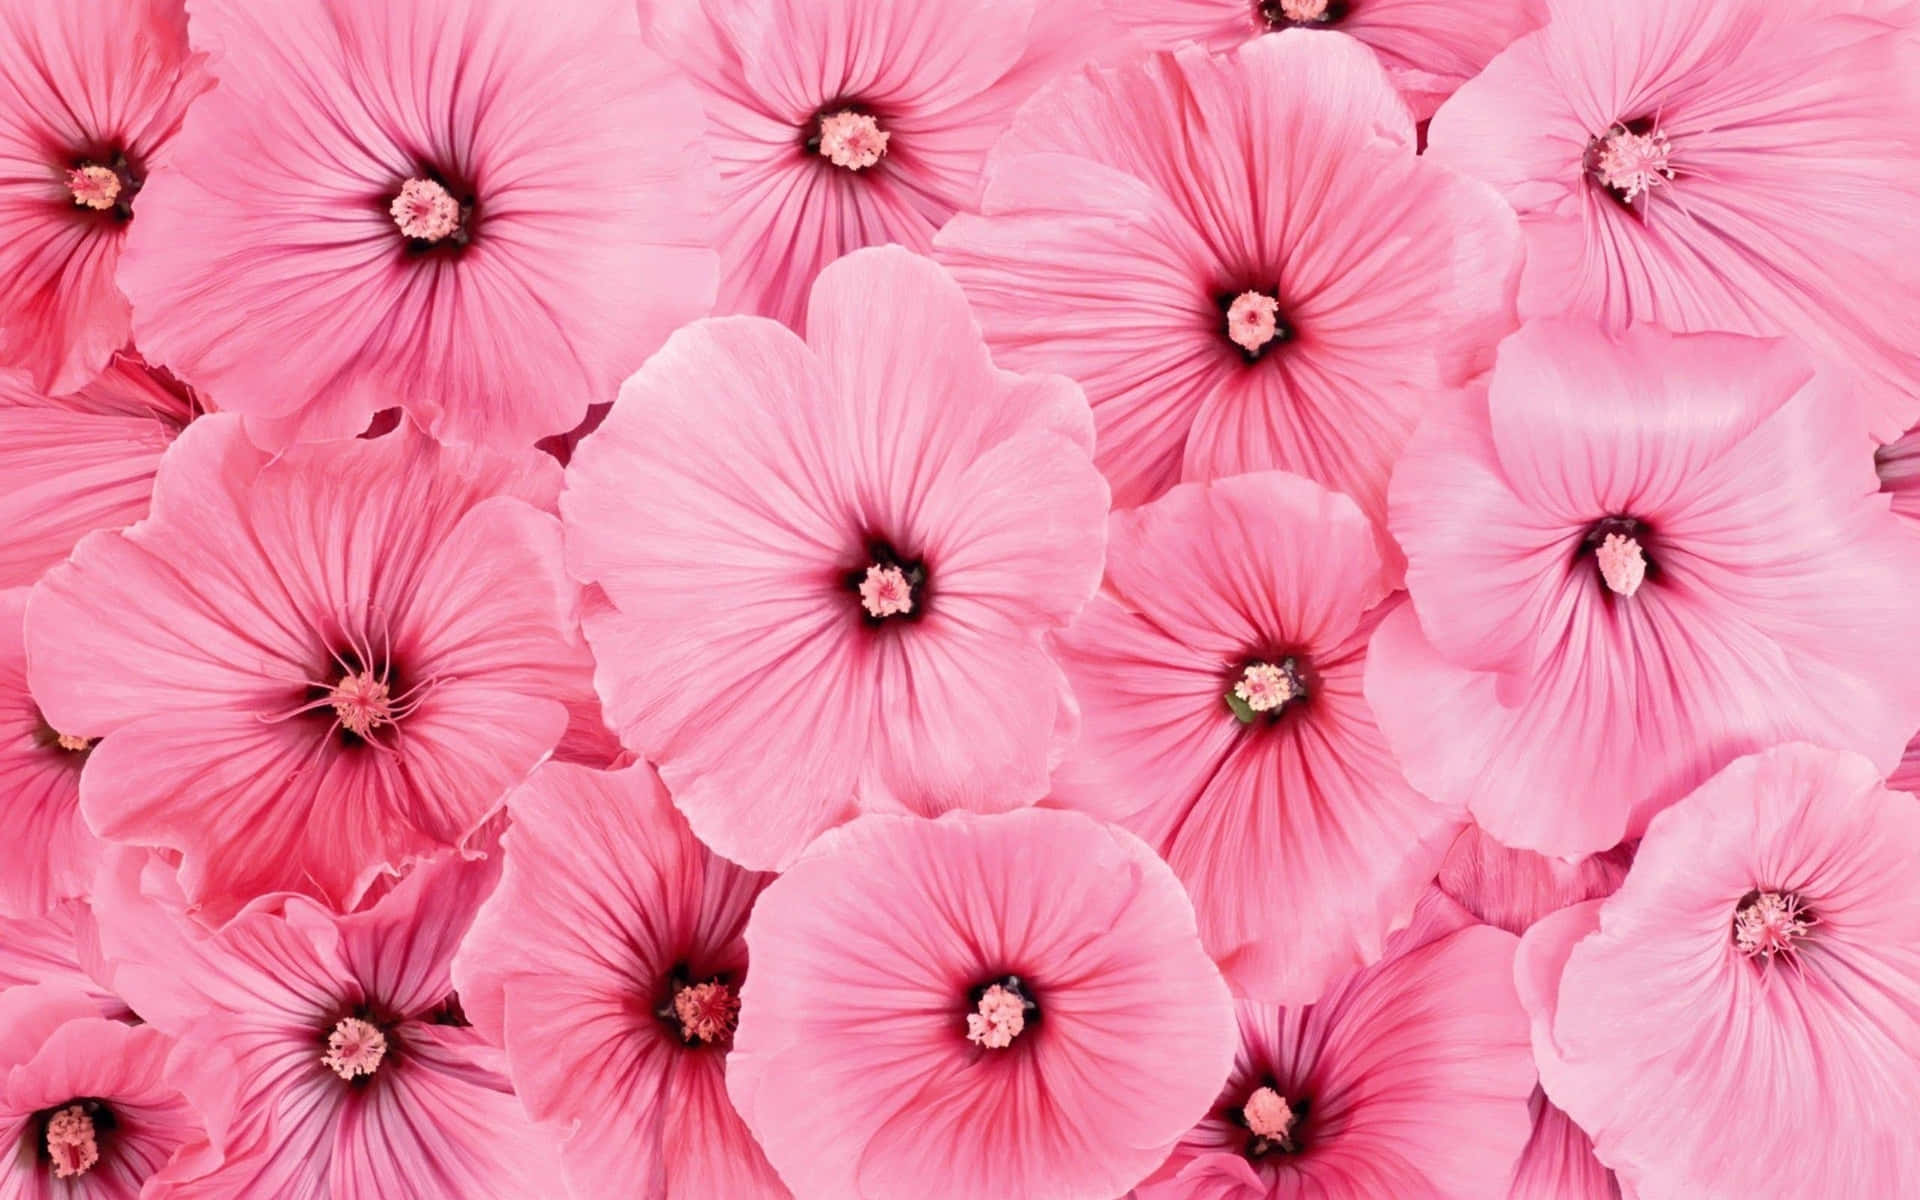 A beautiful pink flower in bloom